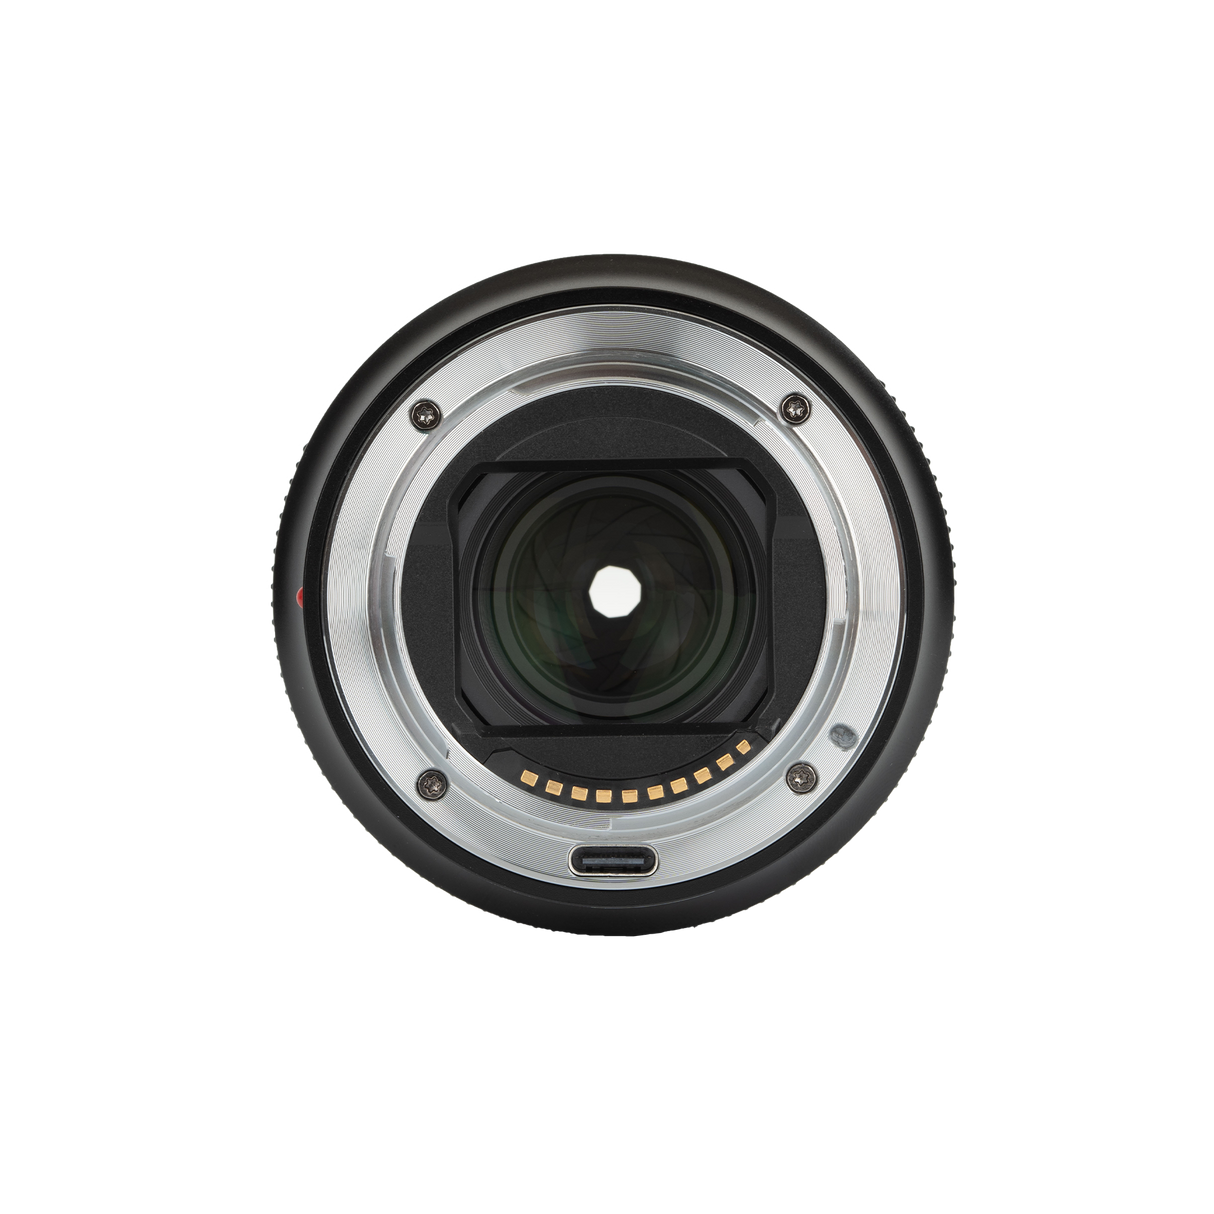 Lens AF 28mm F/1.8 FE with Sony E mount